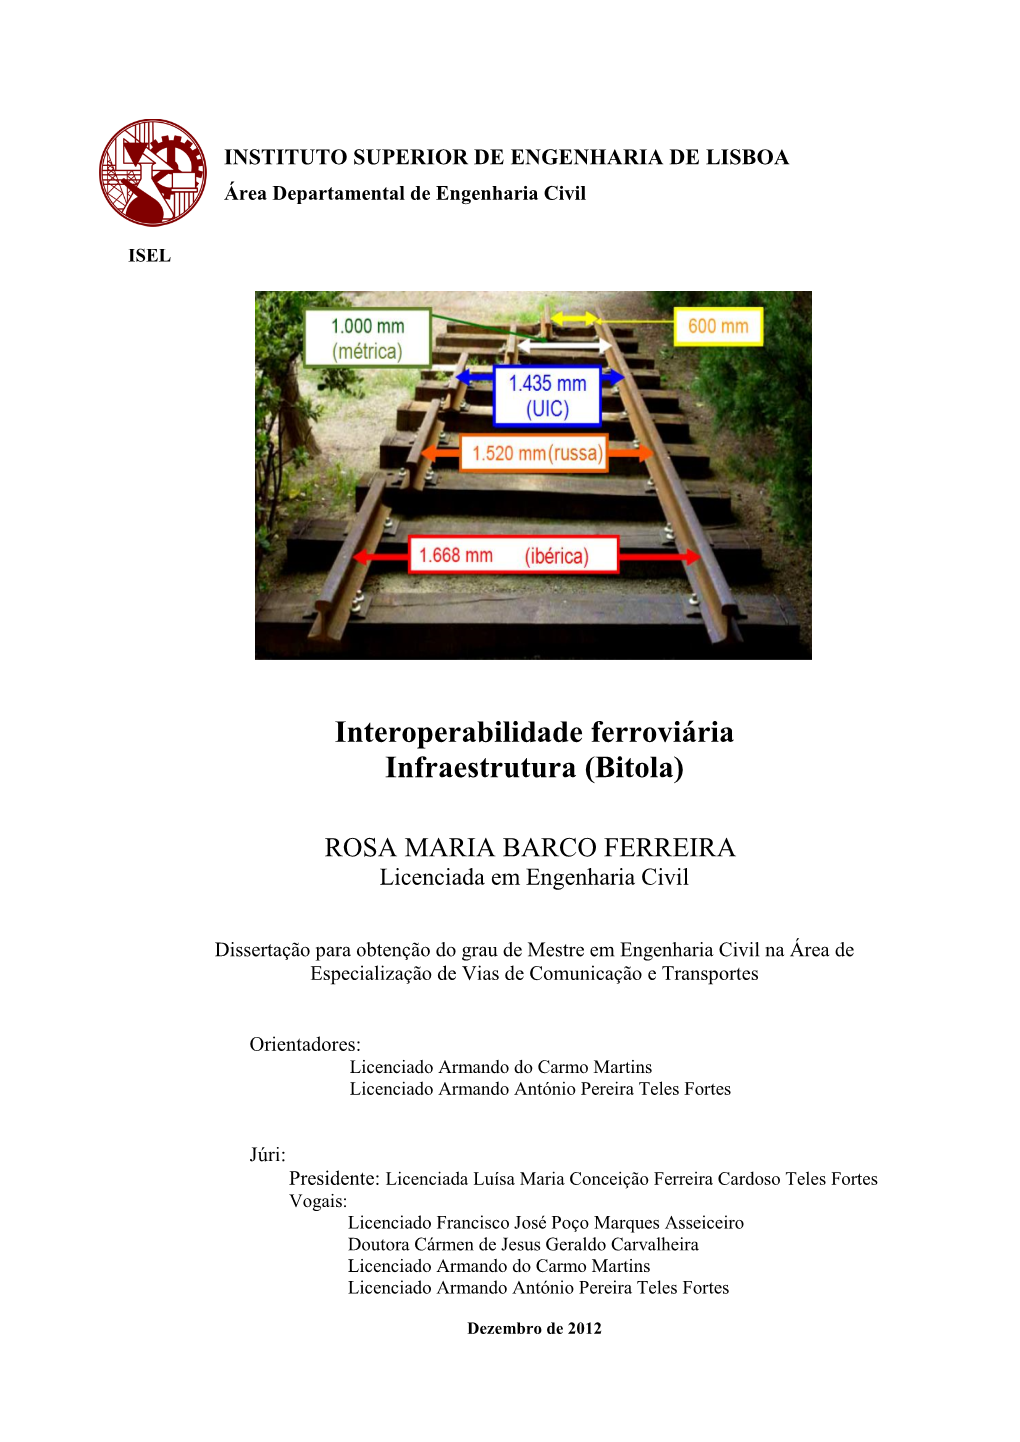 Interoperabilidade Ferroviária – Infraestrutura (Bitola)